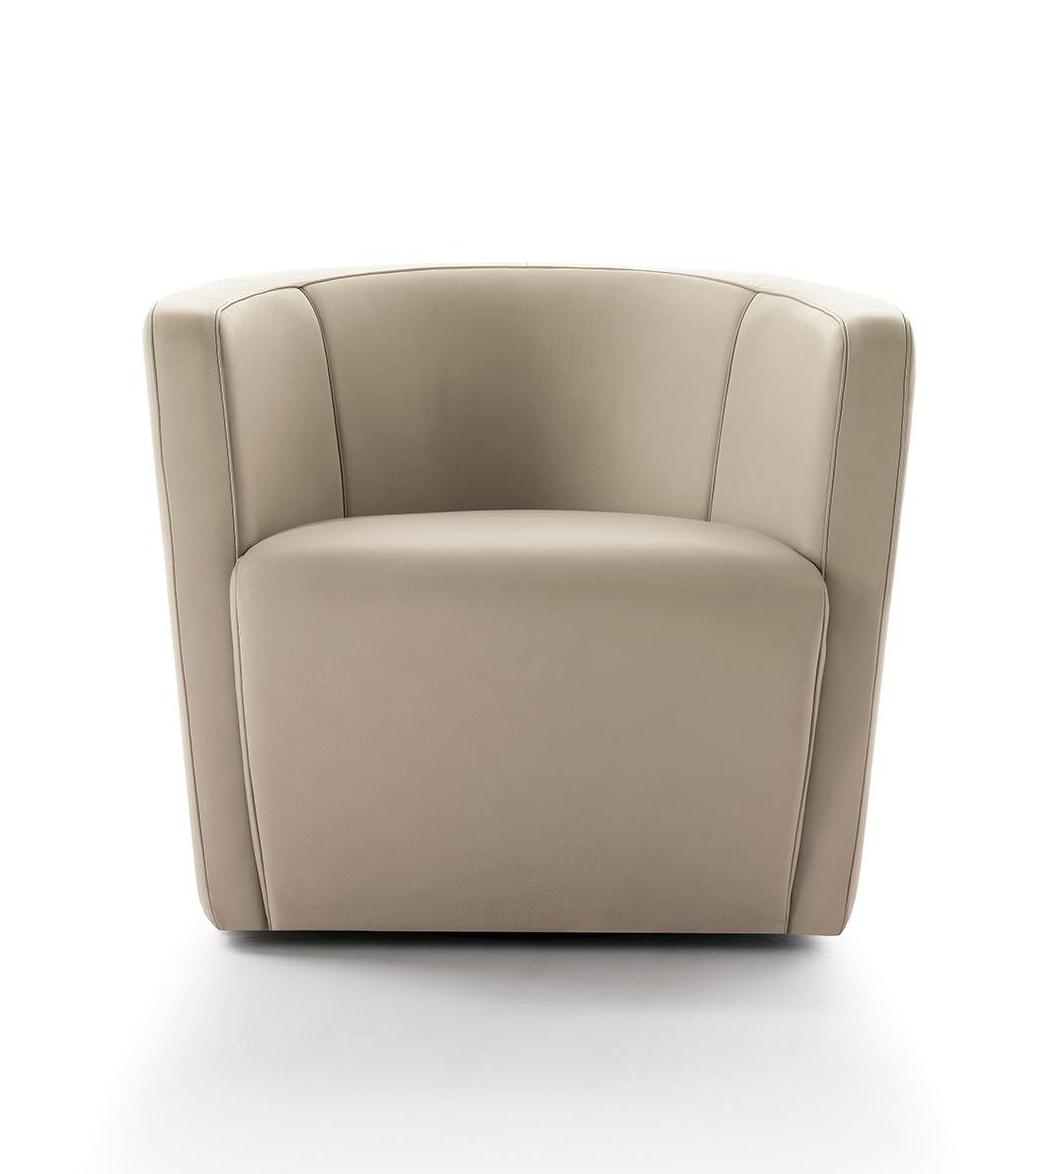 Round Comfort Low Armchair